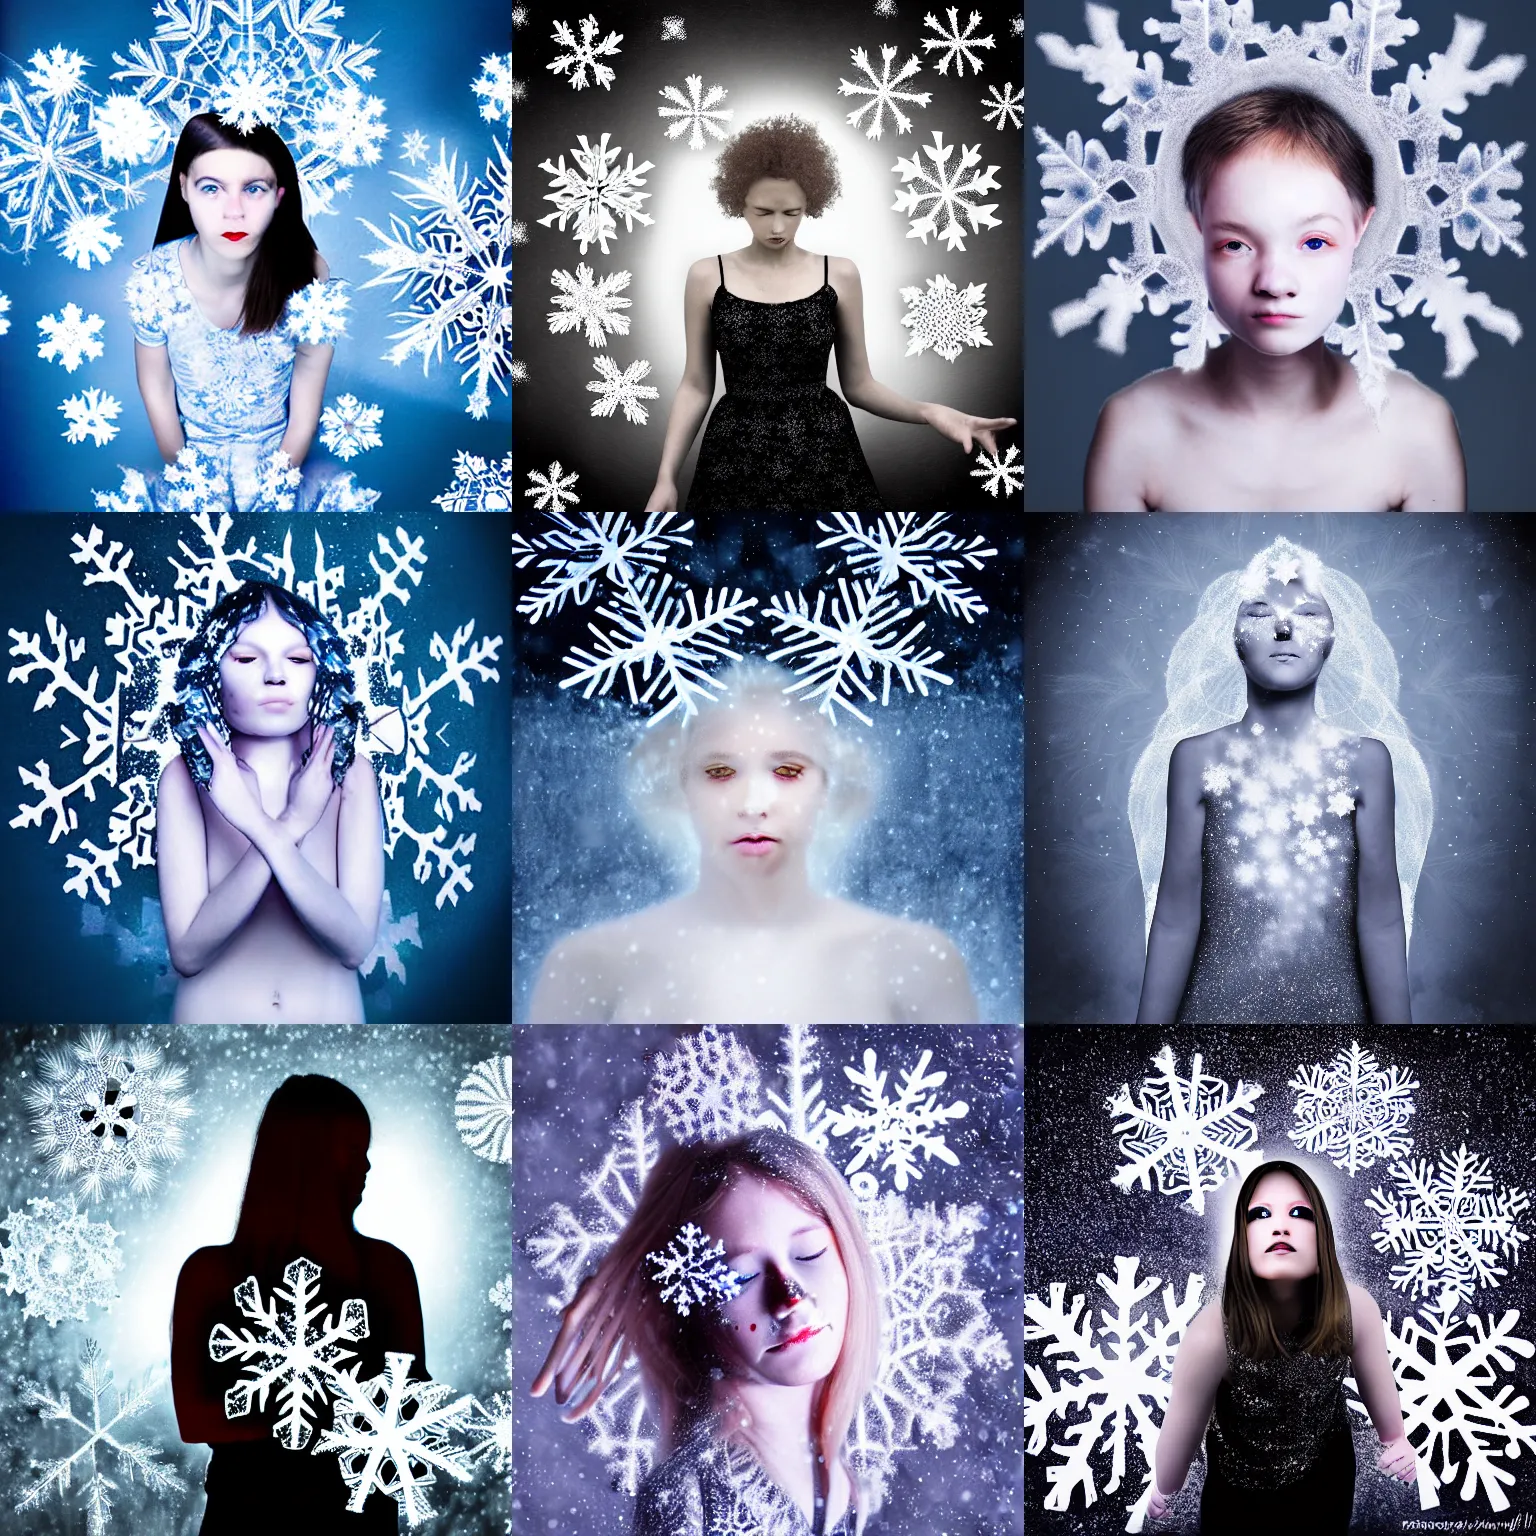 Prompt: surreal photography snowflakes spirit portrait